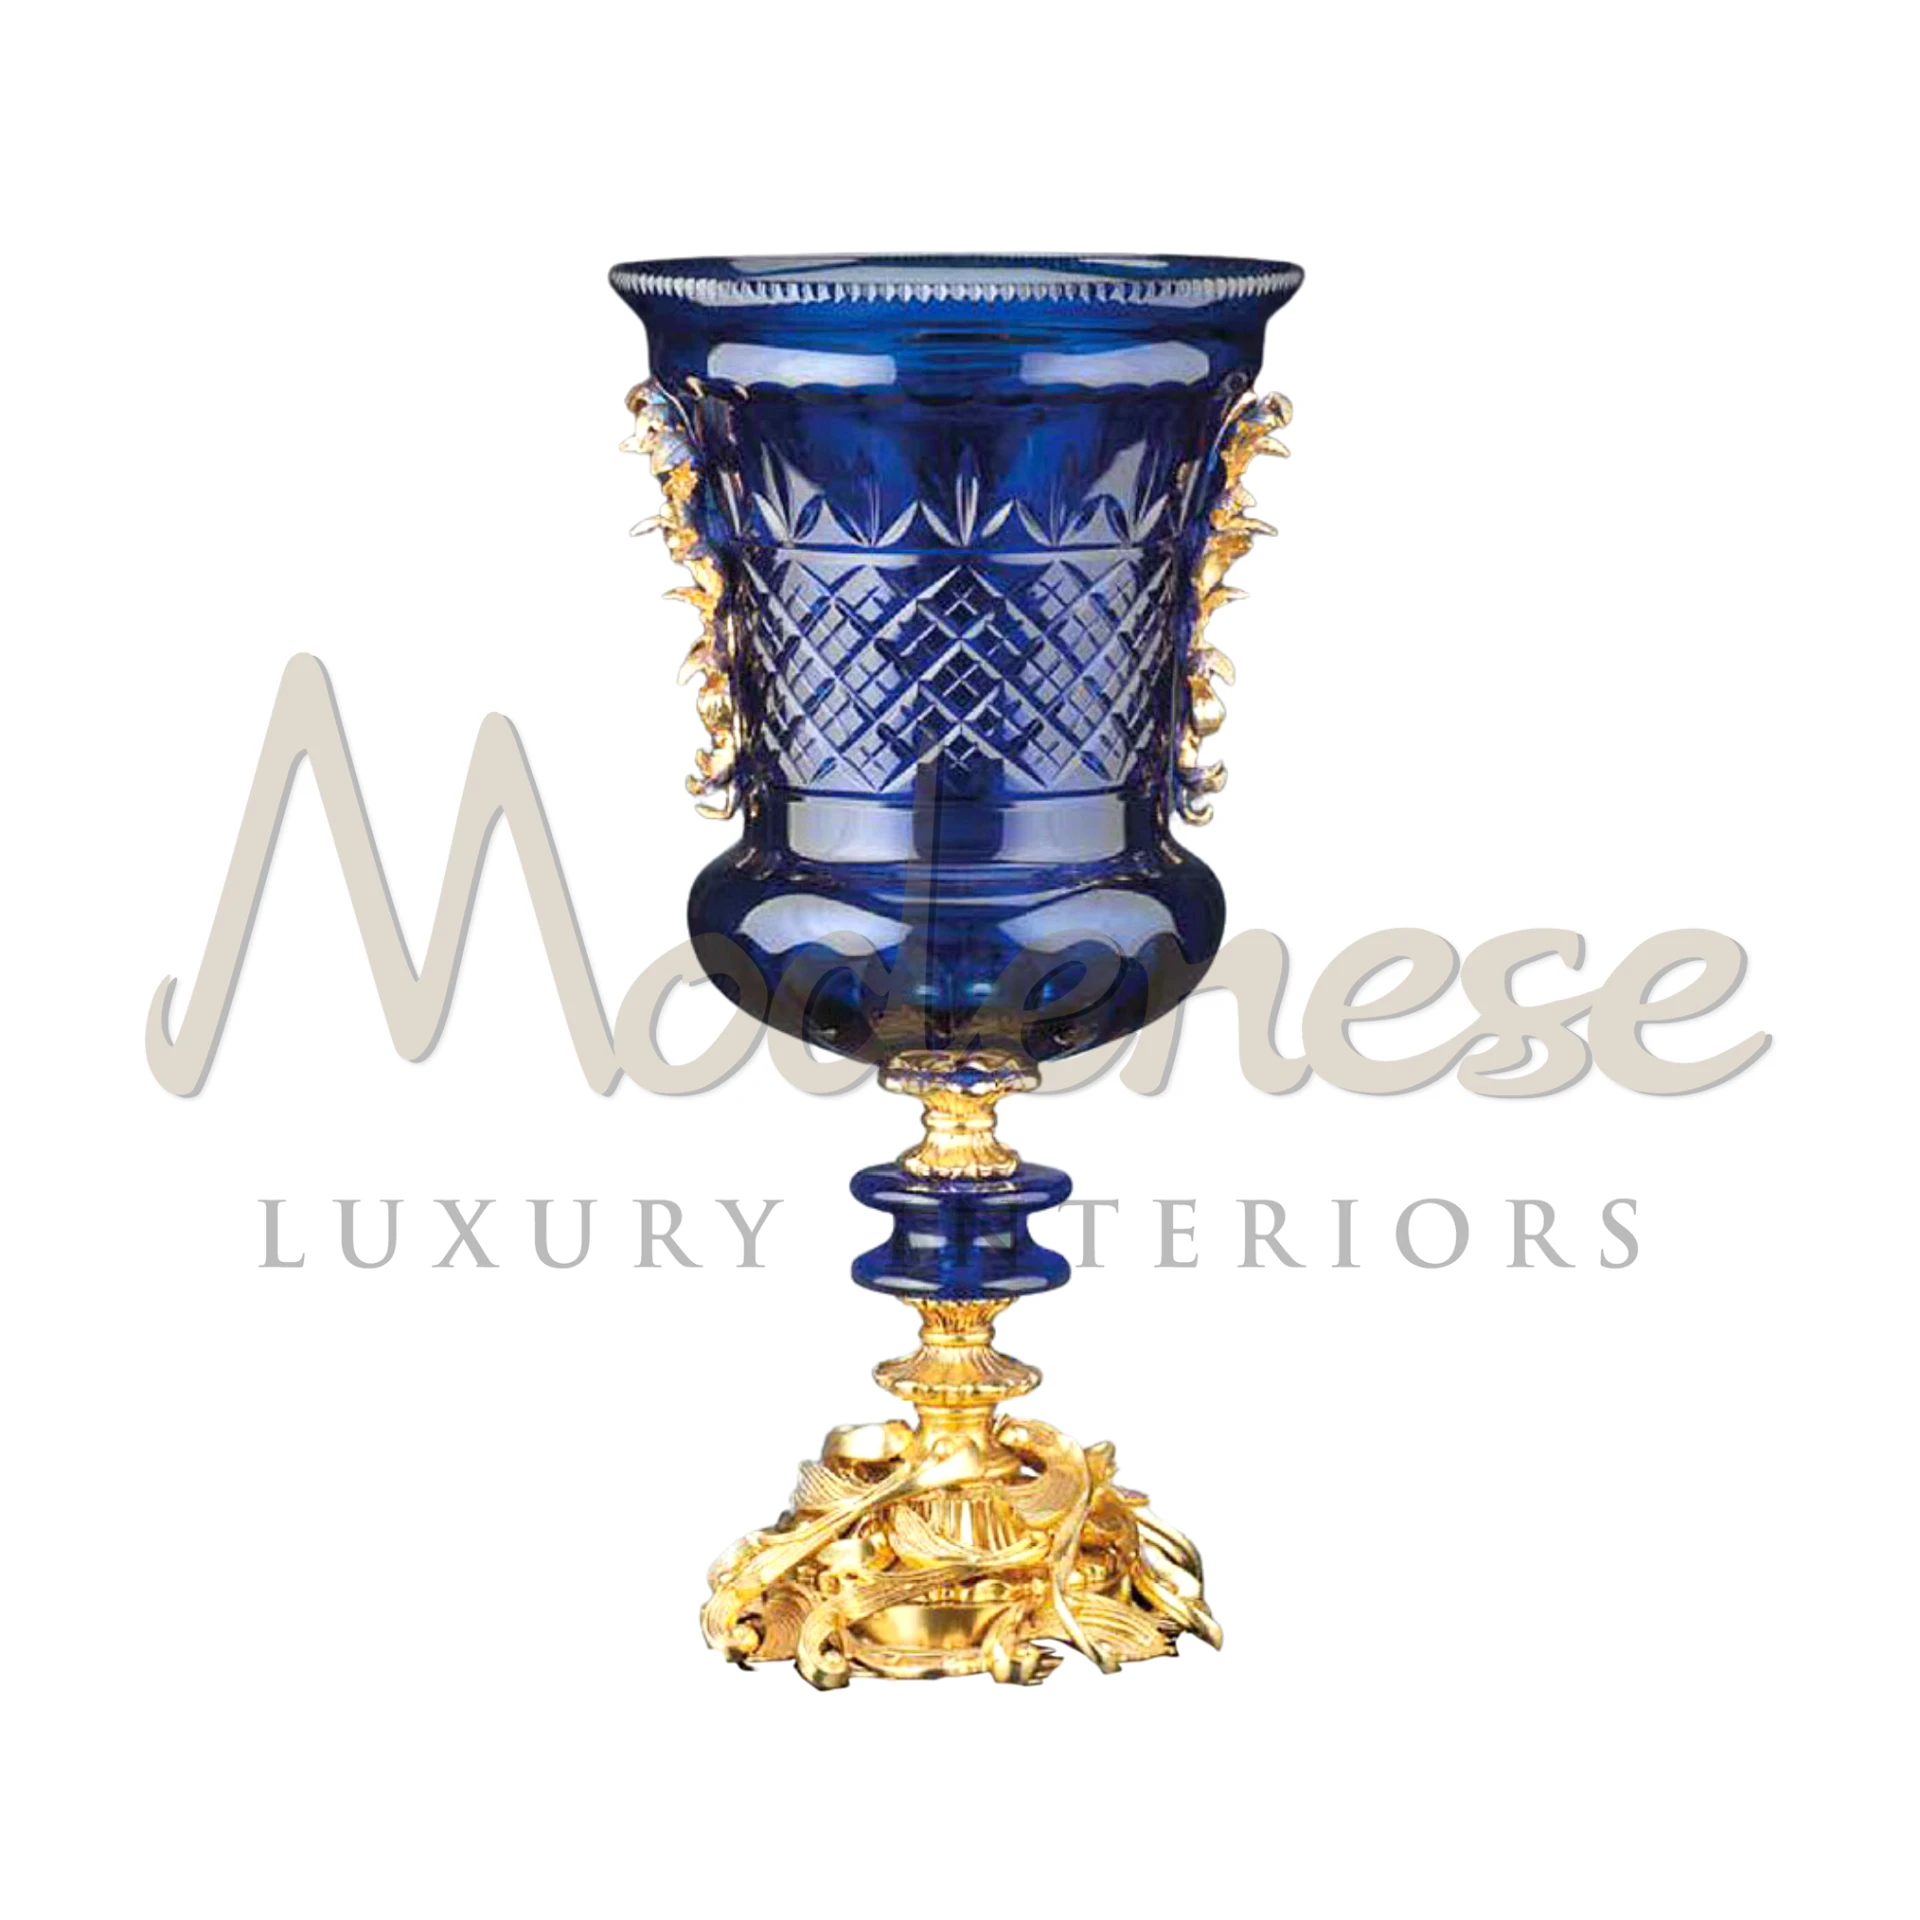 Exquisite Luxury Royal Blue Vase, a captivating decor accent, epitomizing sophistication and elegance.